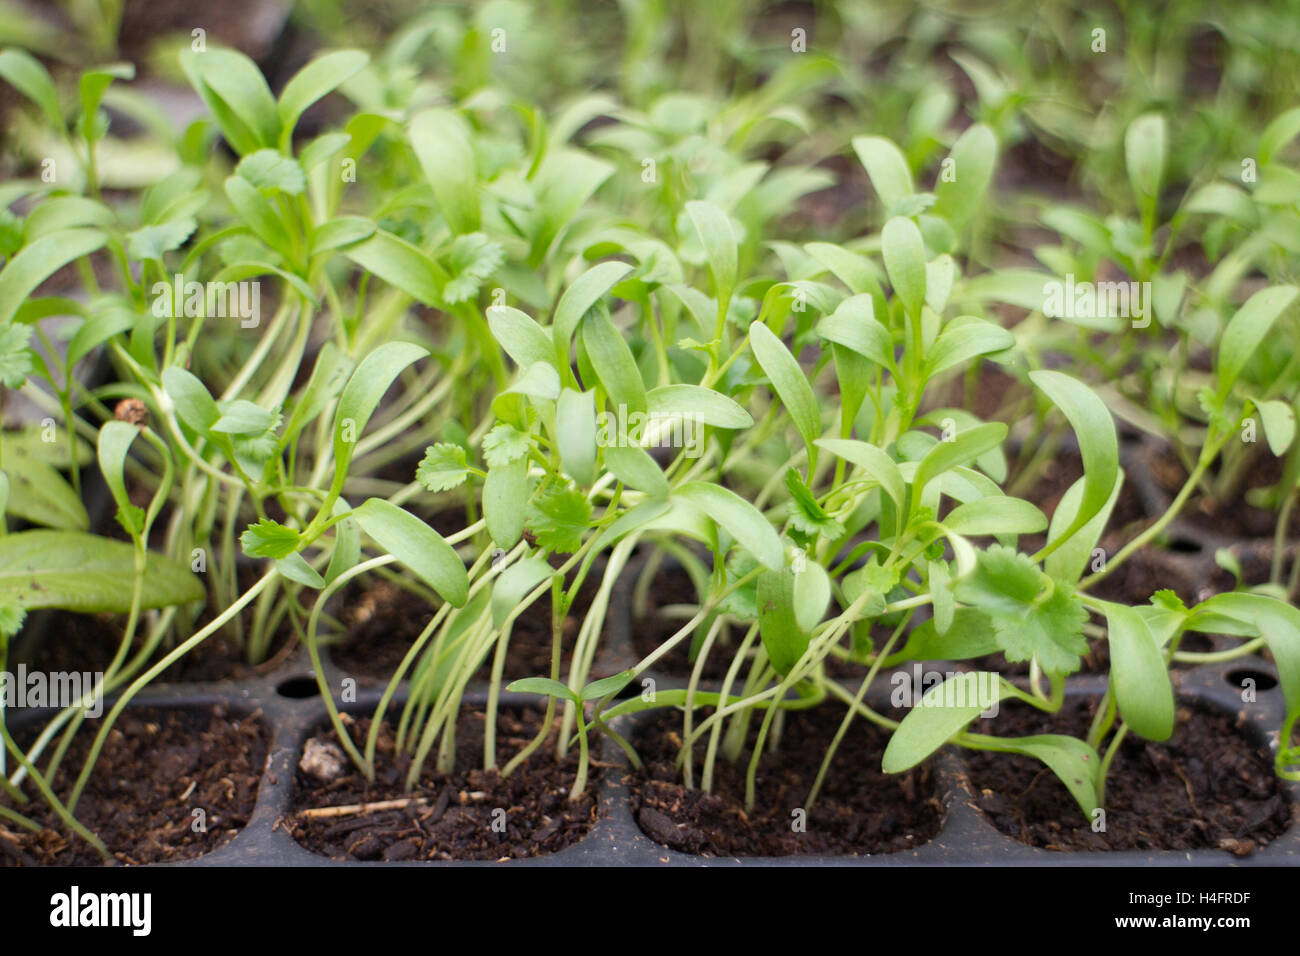 Long plants for transplanting, green farm inspired Stock Photo